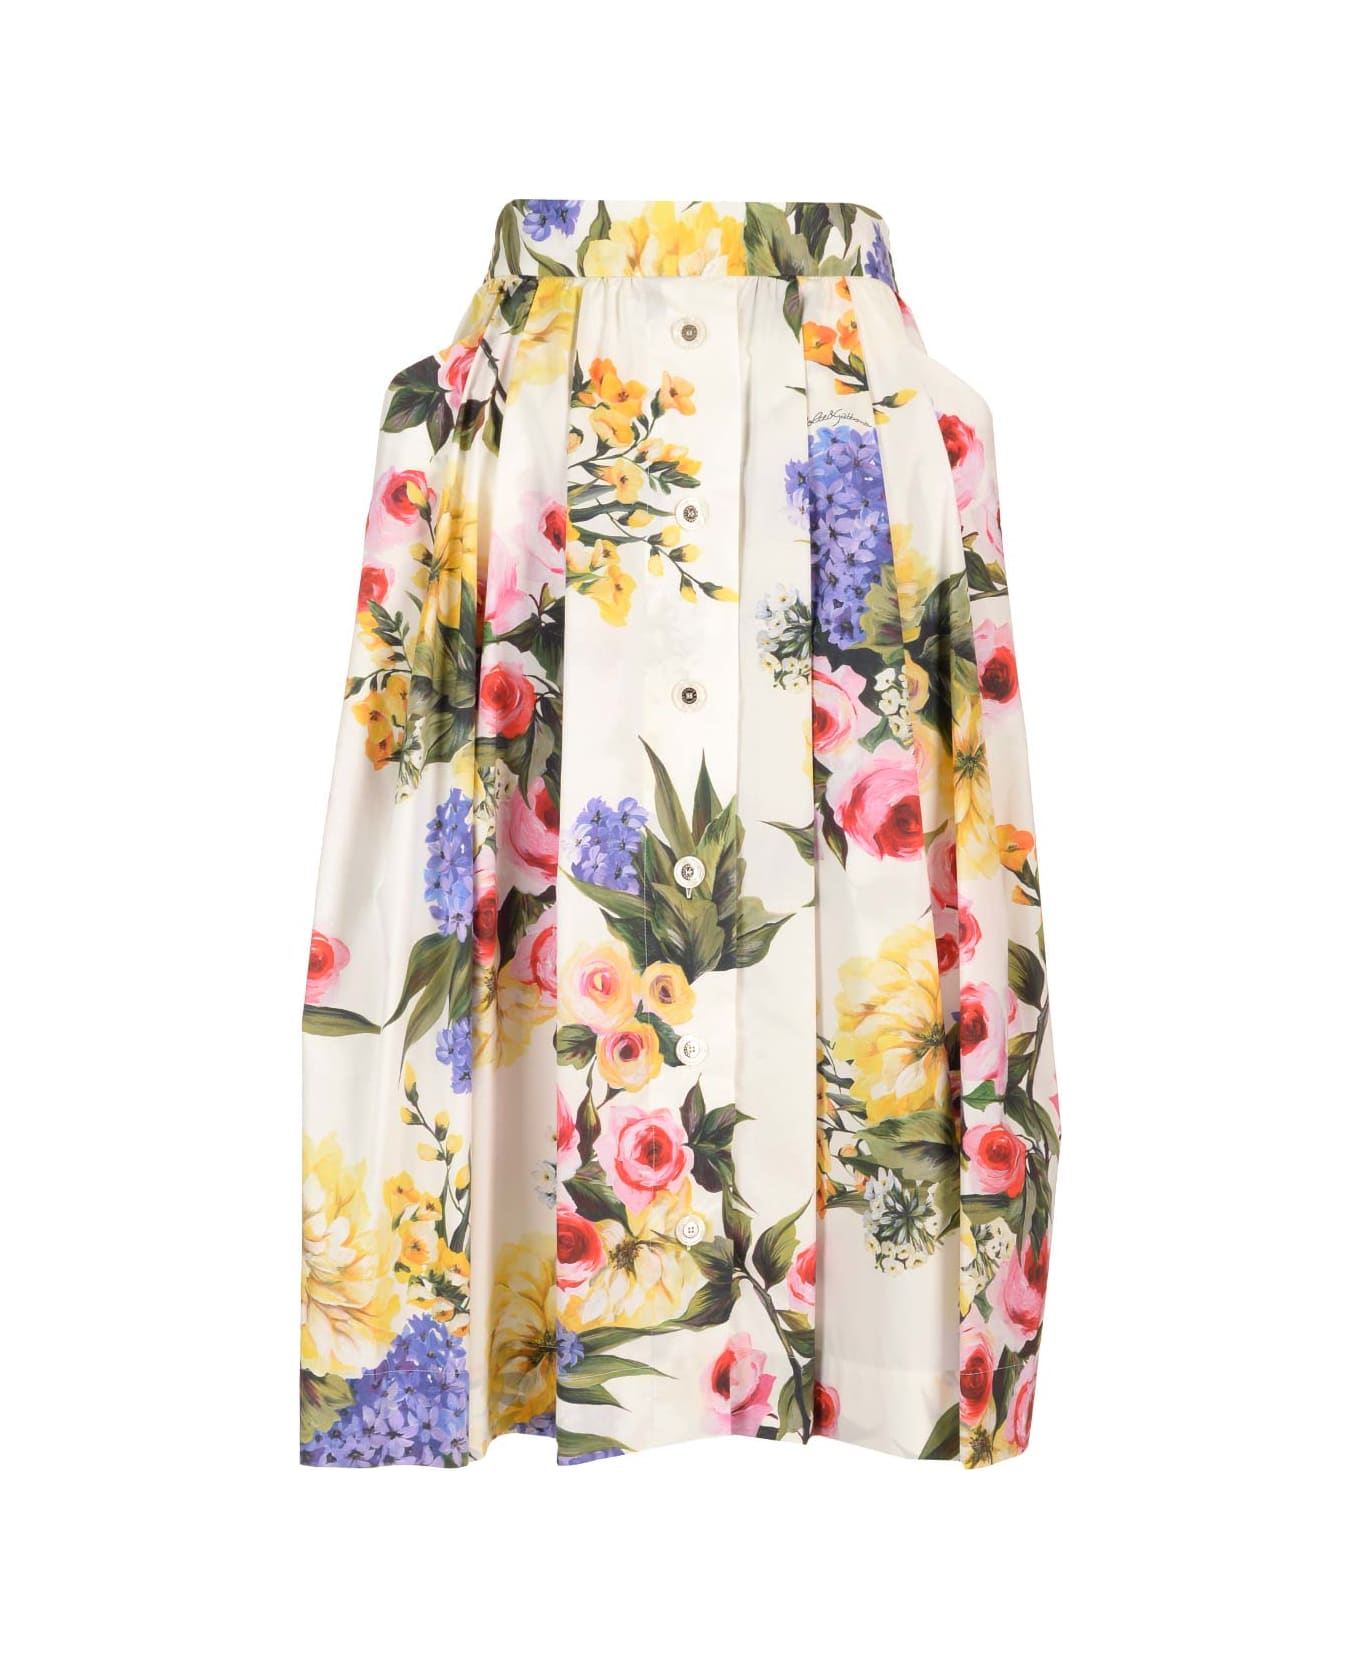 Dolce & Gabbana Floral Print Skirt - Multicolor スカート